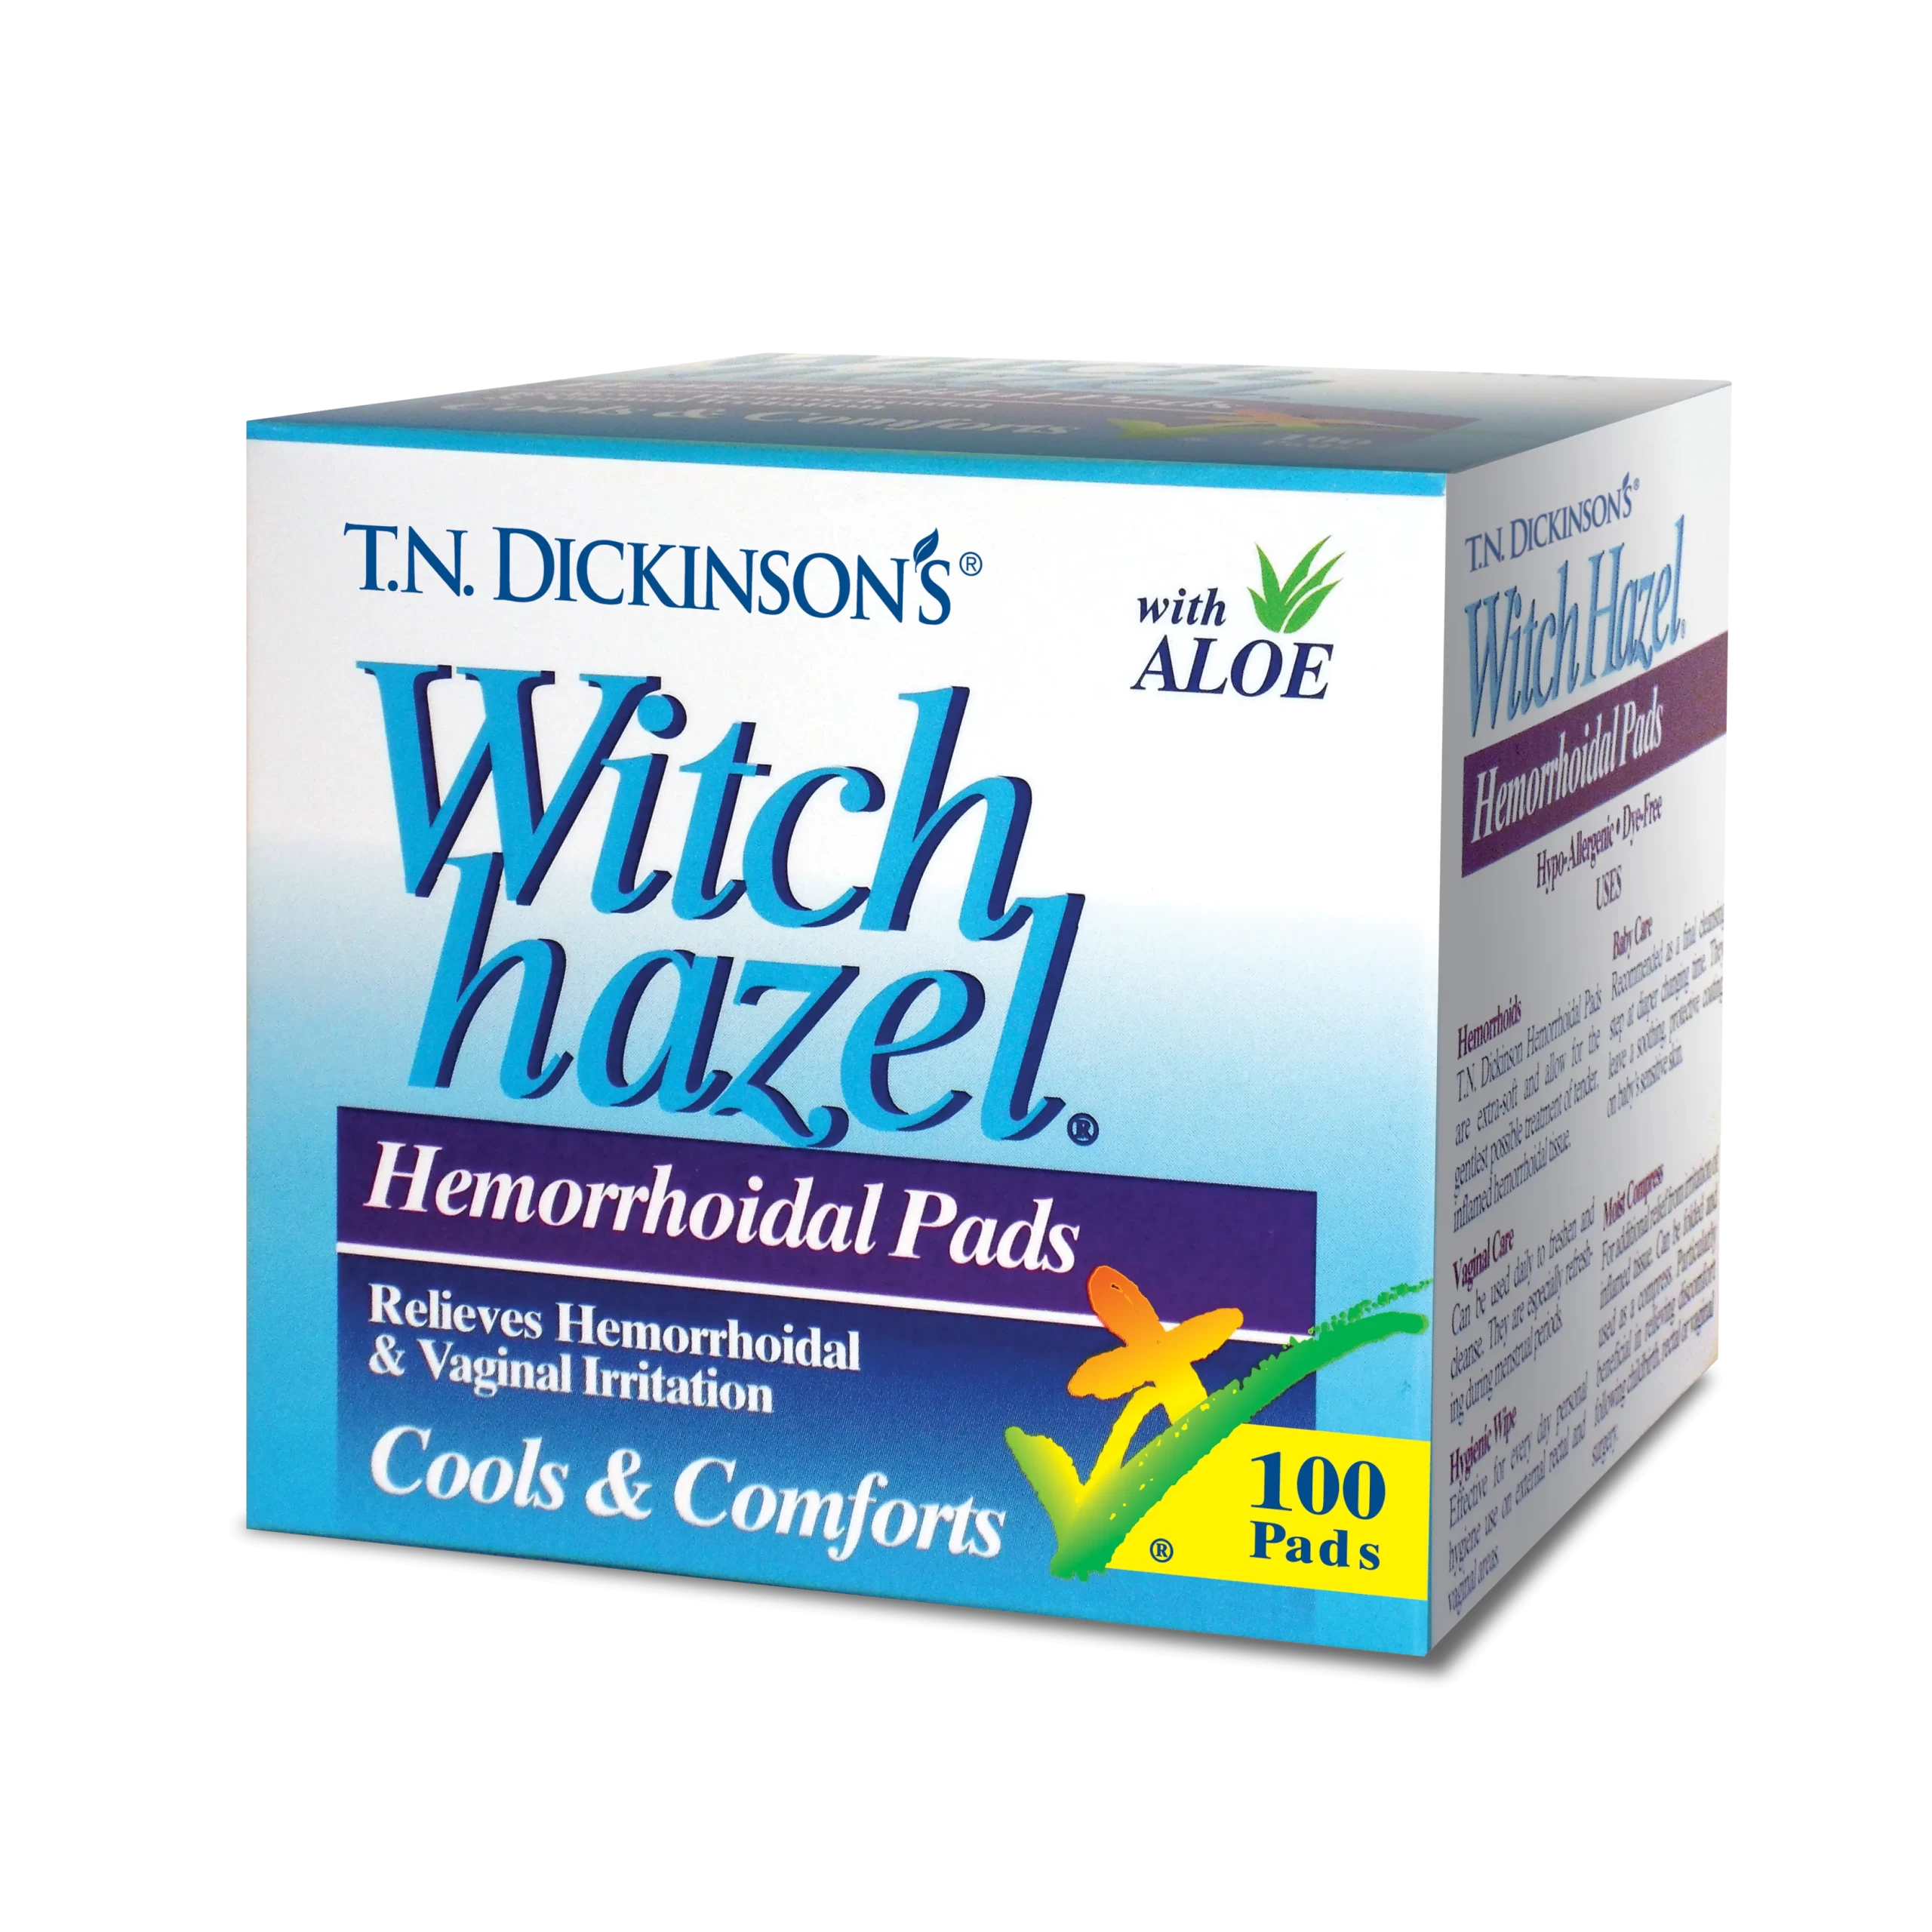 T. N. Dickinson's witch hazel hemorrhoidal pads with aloe